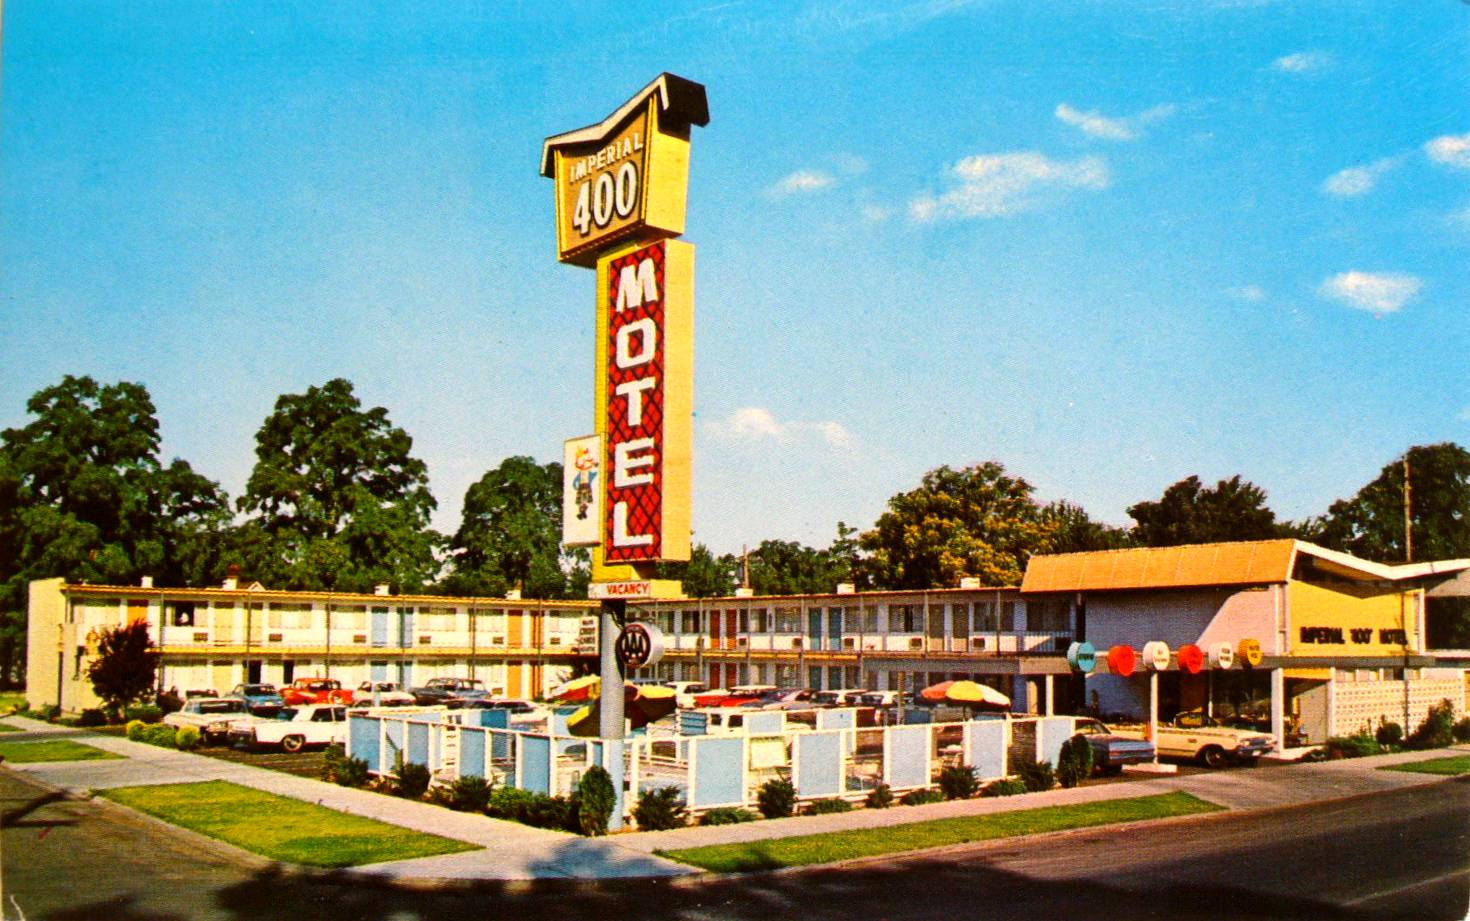 Imperial+400+motel+postcard.JPG